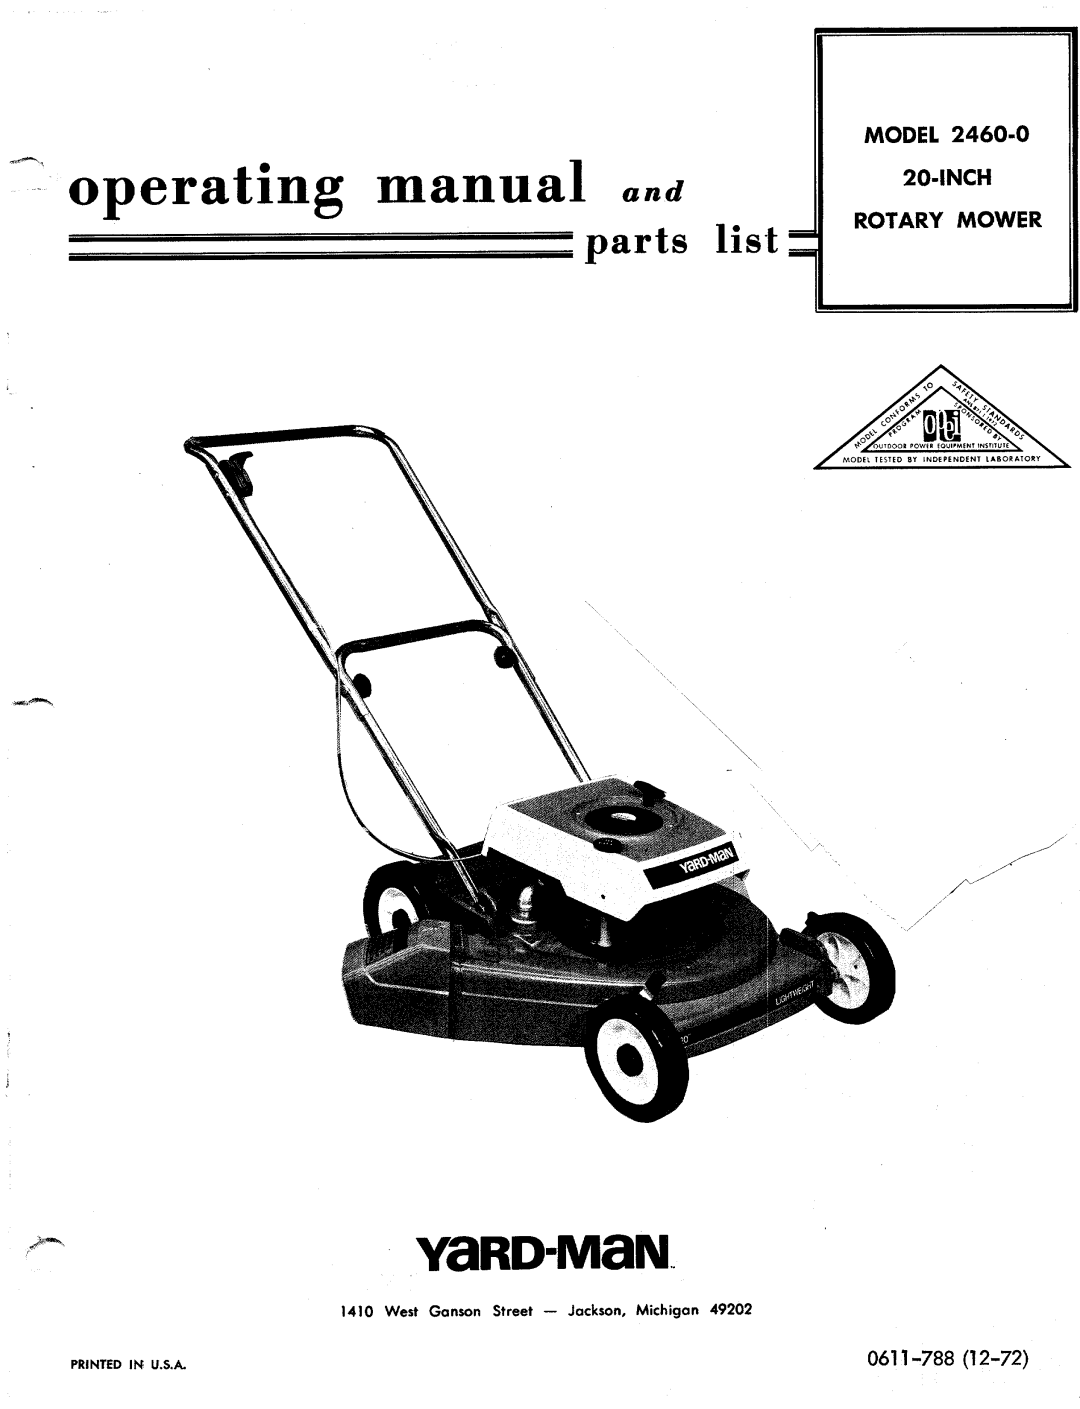 Yard-Man 2460-0 manual 